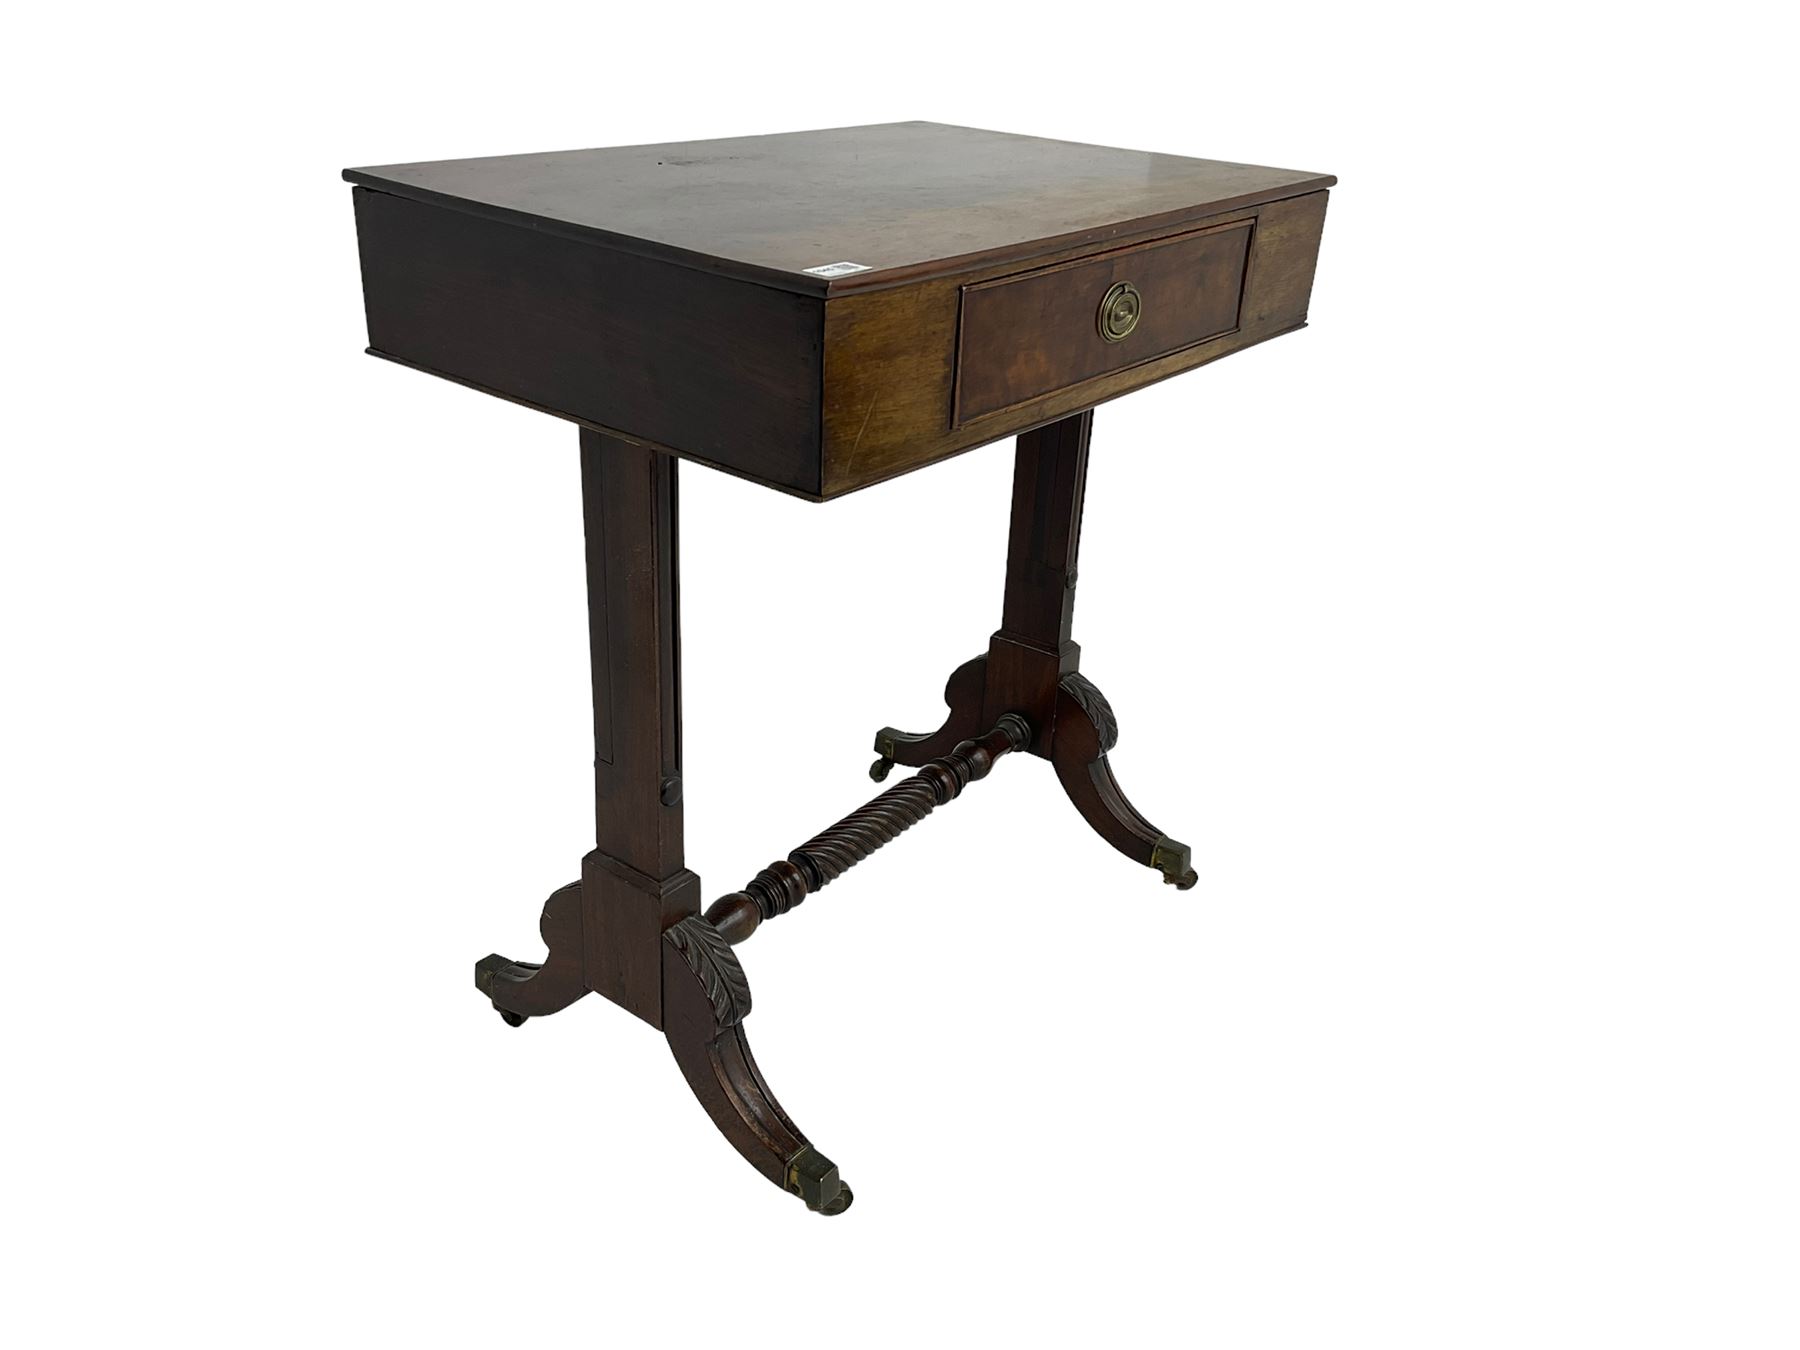 19th century mahogany side table - Image 4 of 6